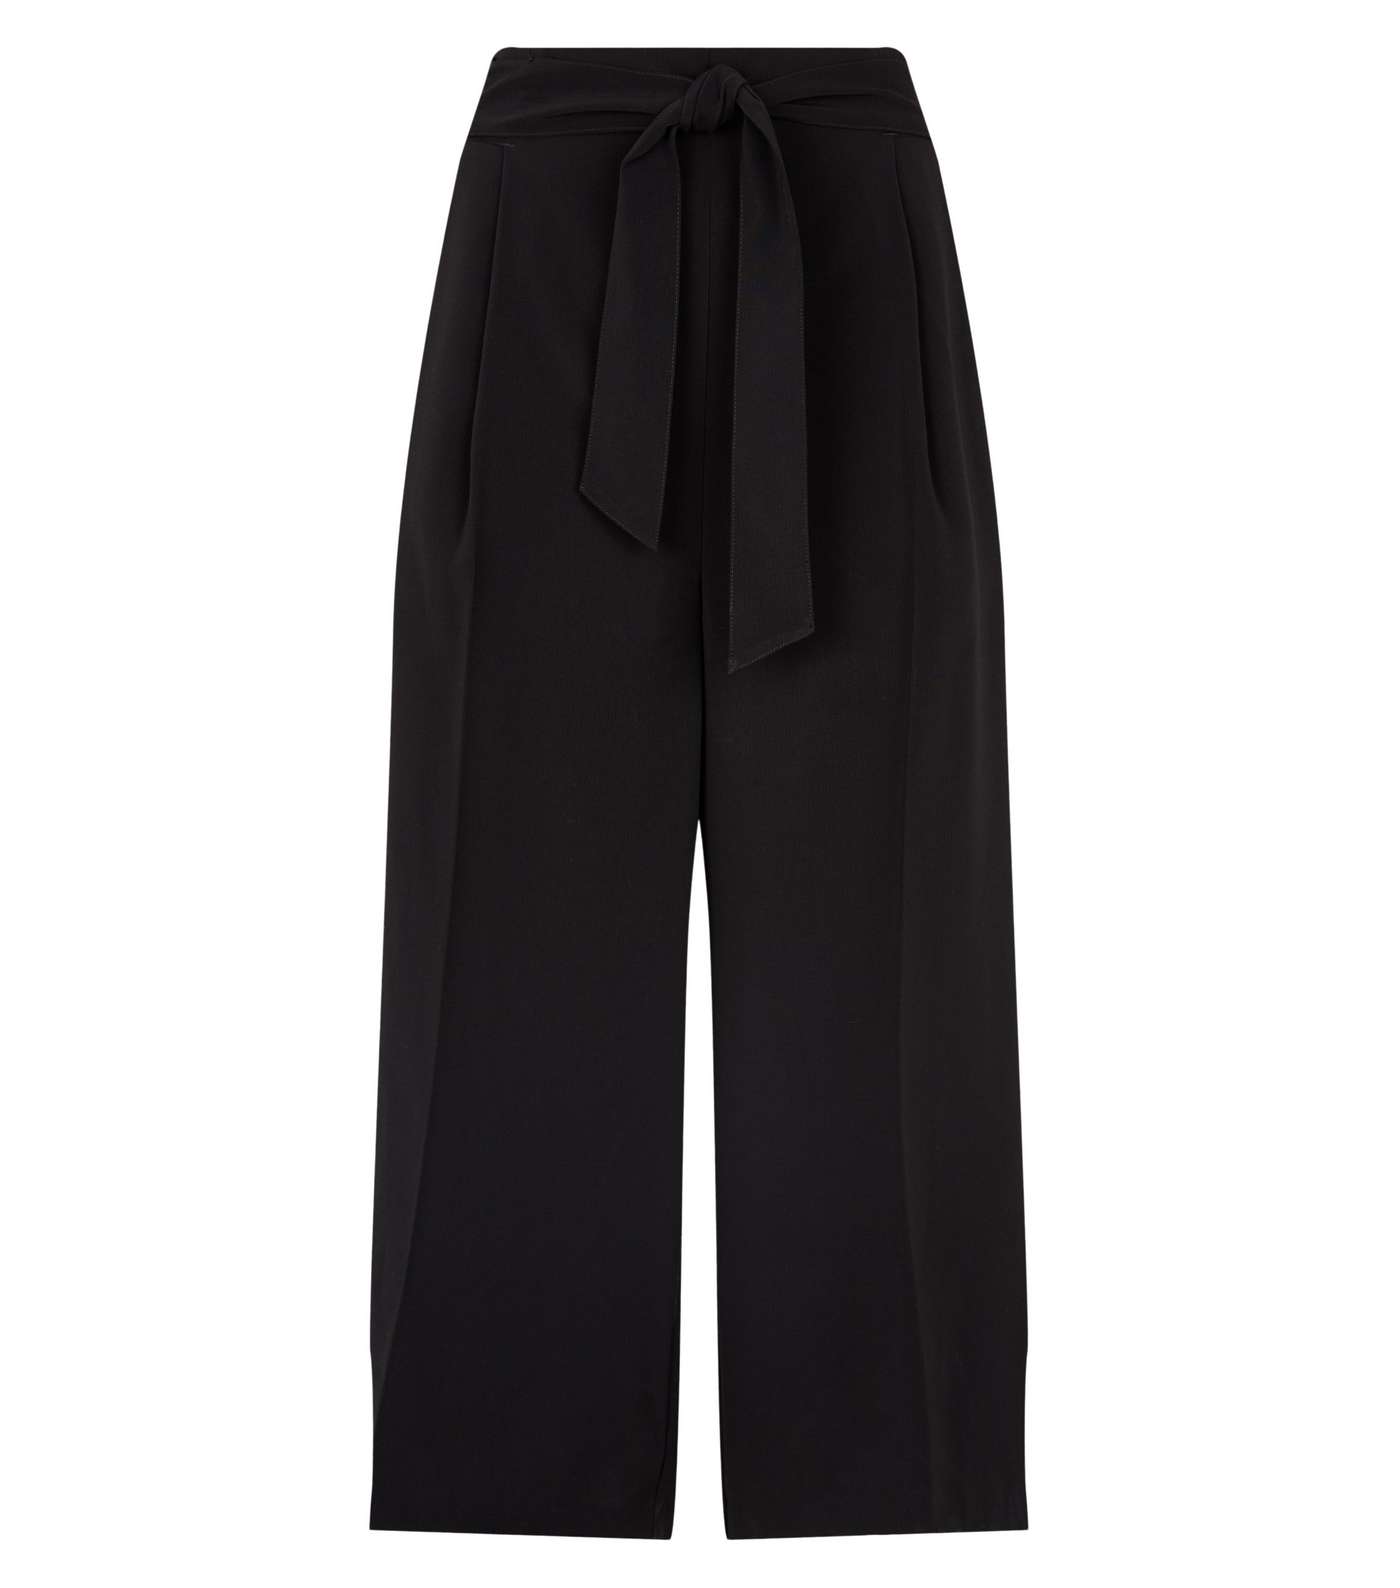 Petite Black Tie Waist Crop Trousers Image 4